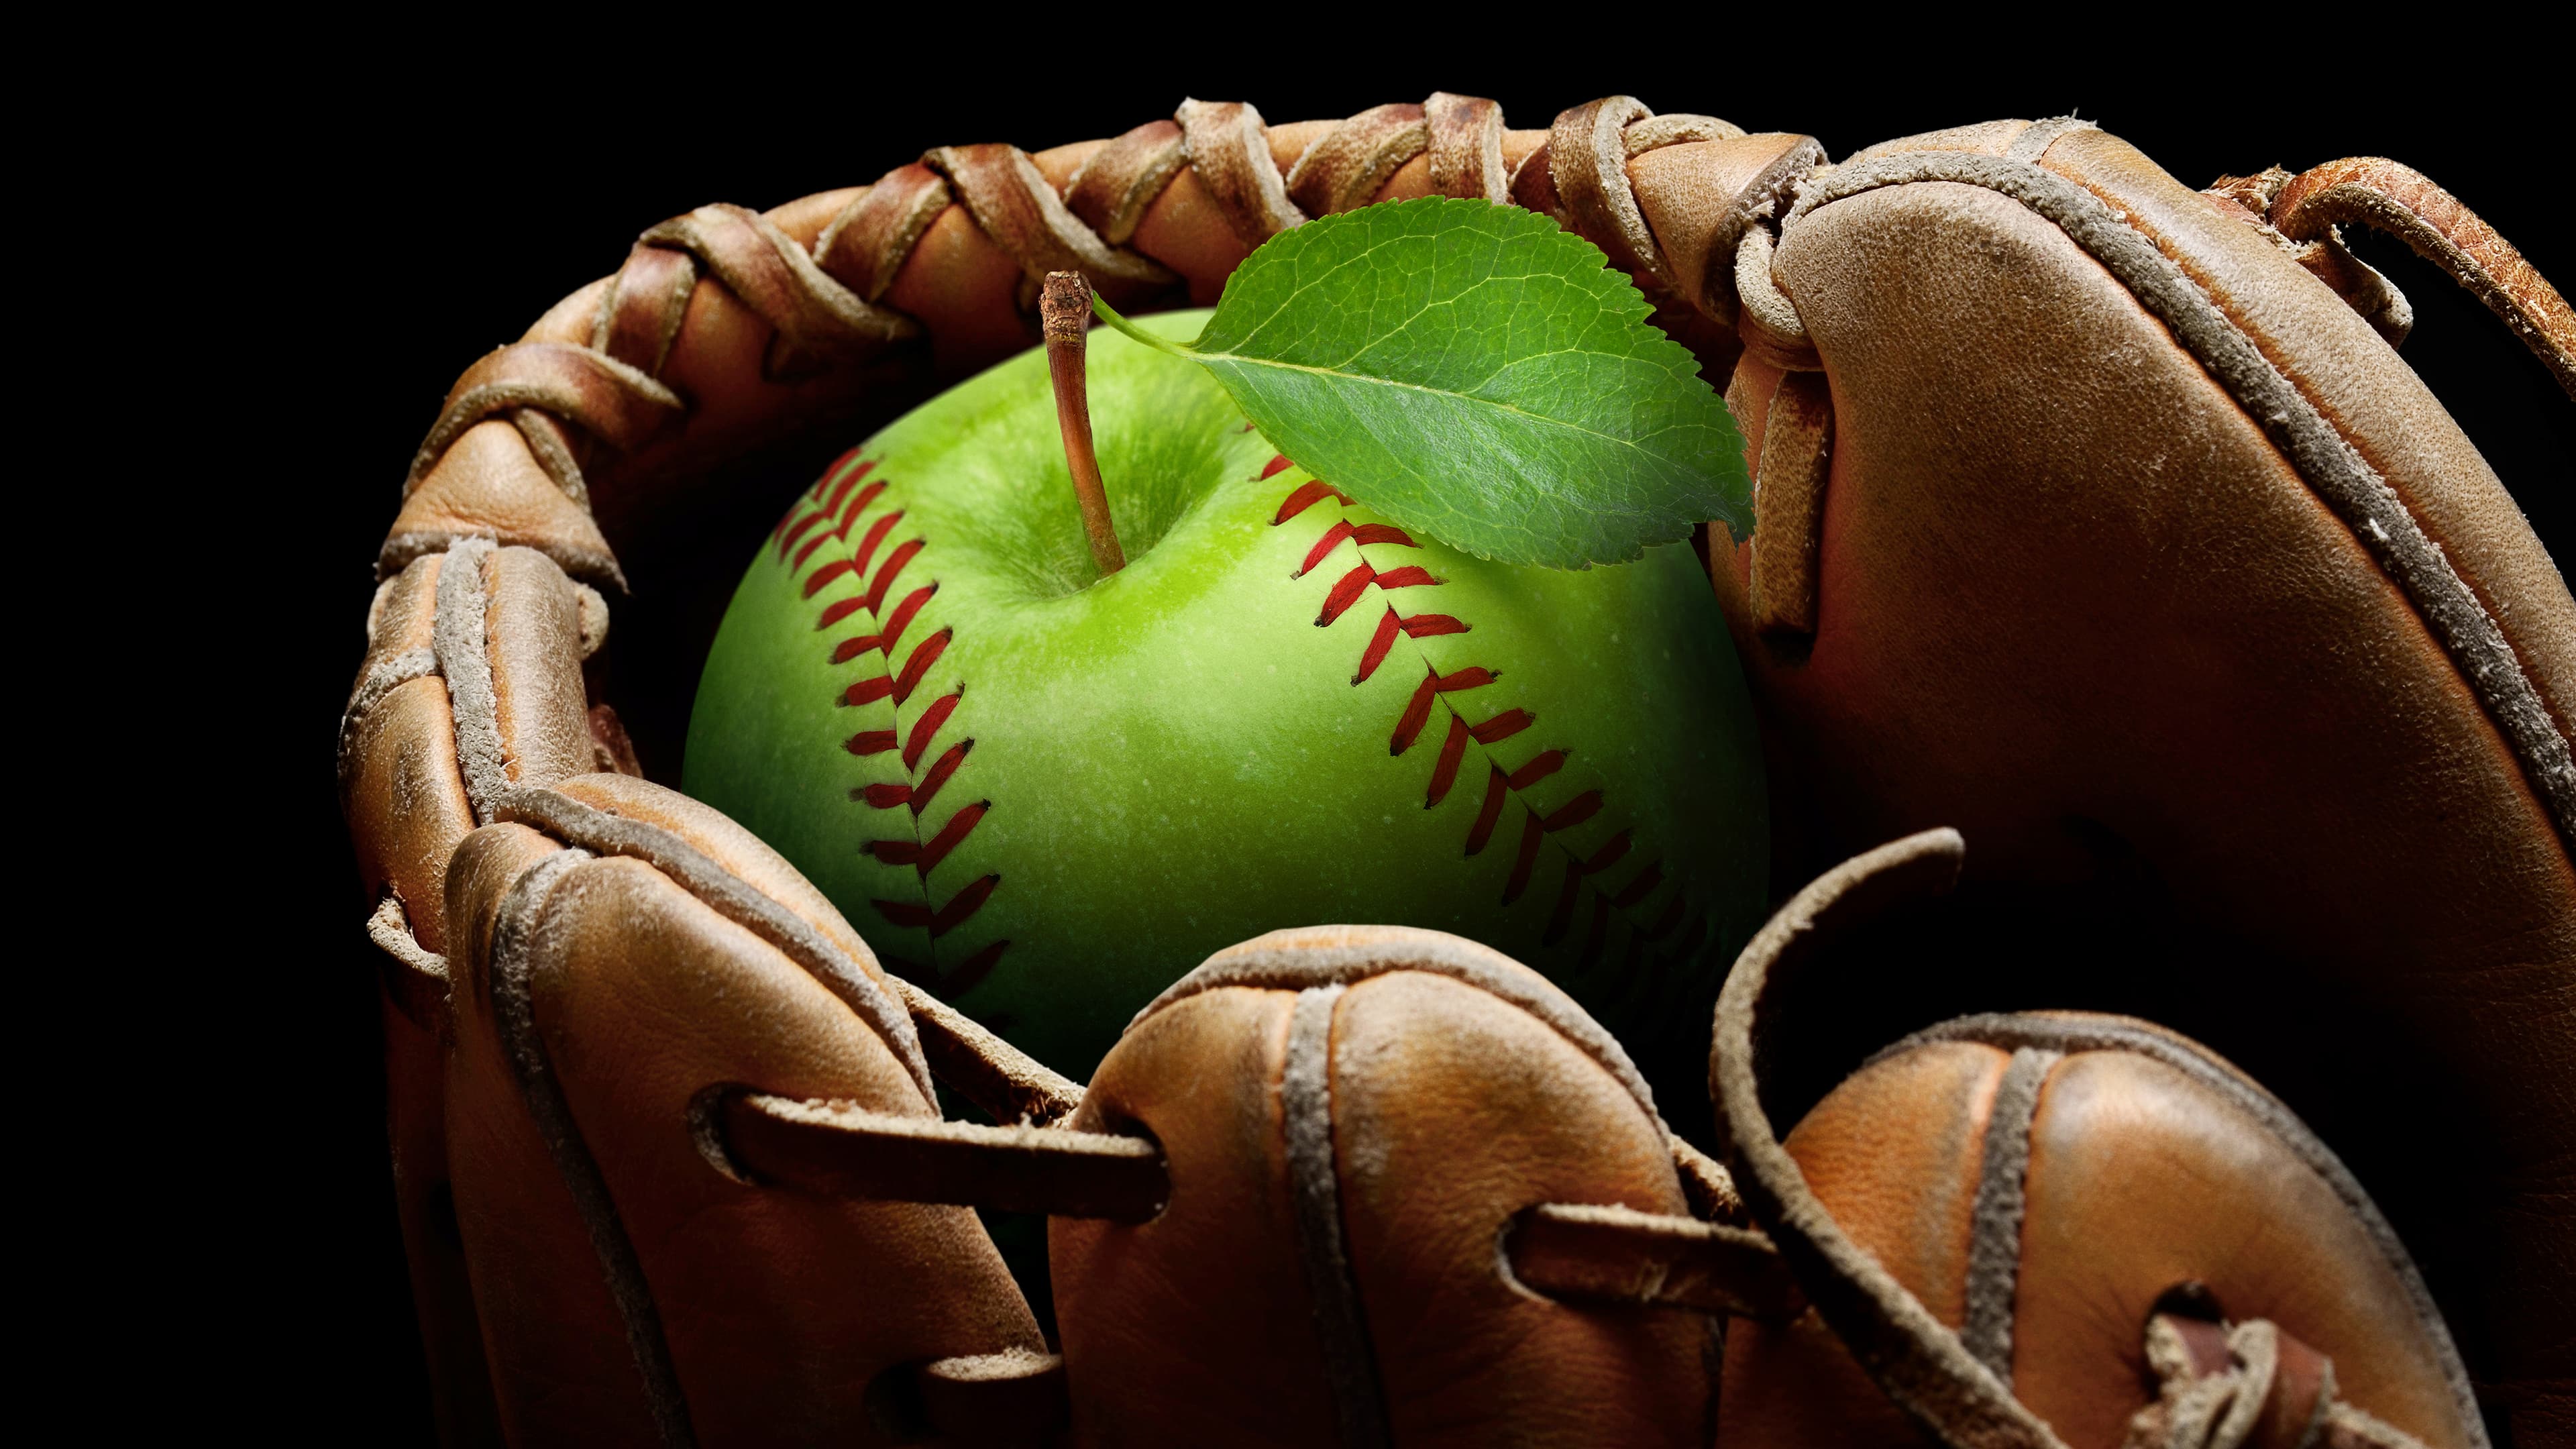 Baseball glove with an apple inside